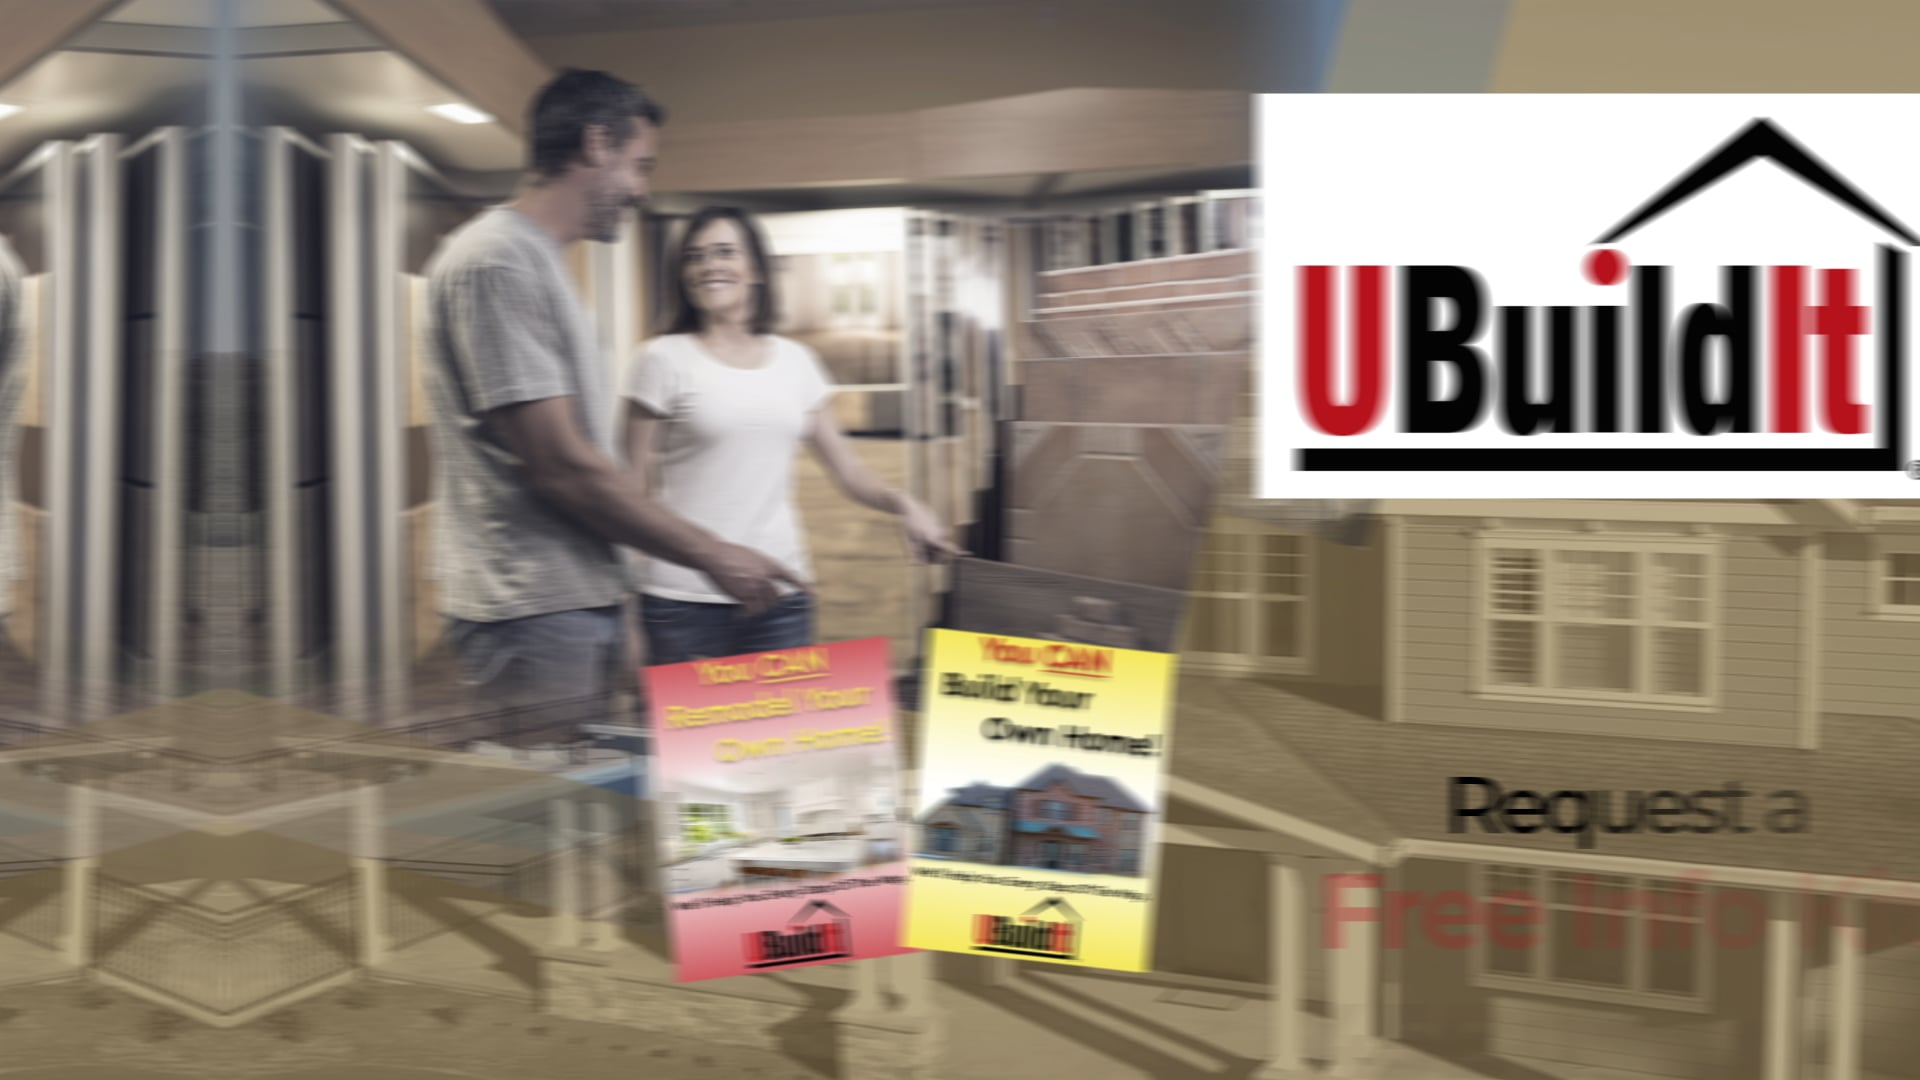 UBuildIT Commercial